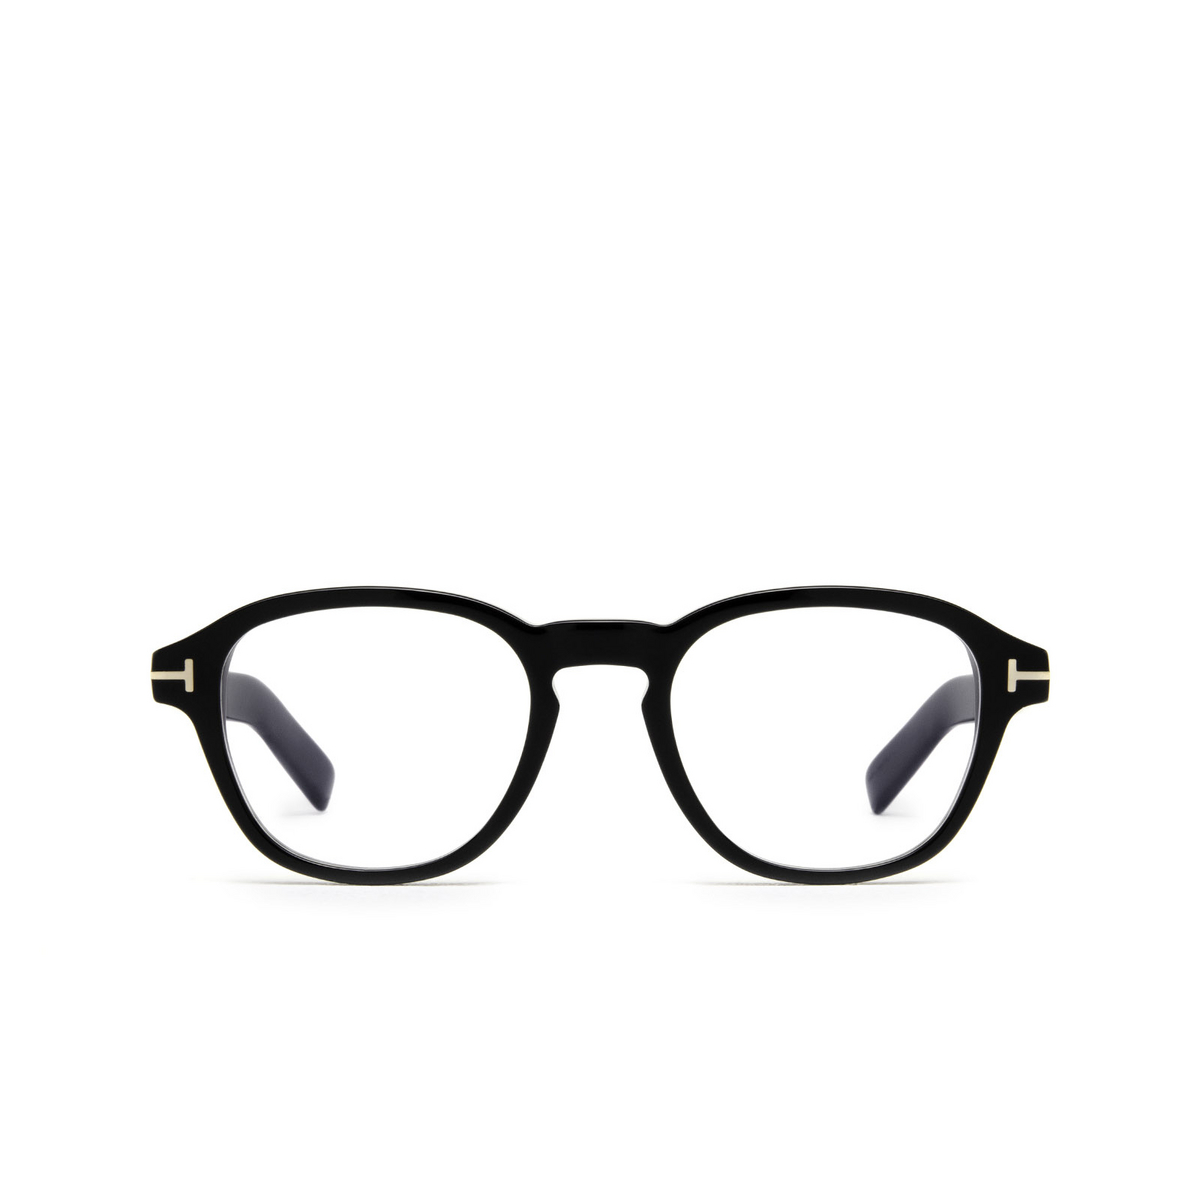 Tom Ford® Square Eyeglasses: FT5821-B color Black 001 - front view.